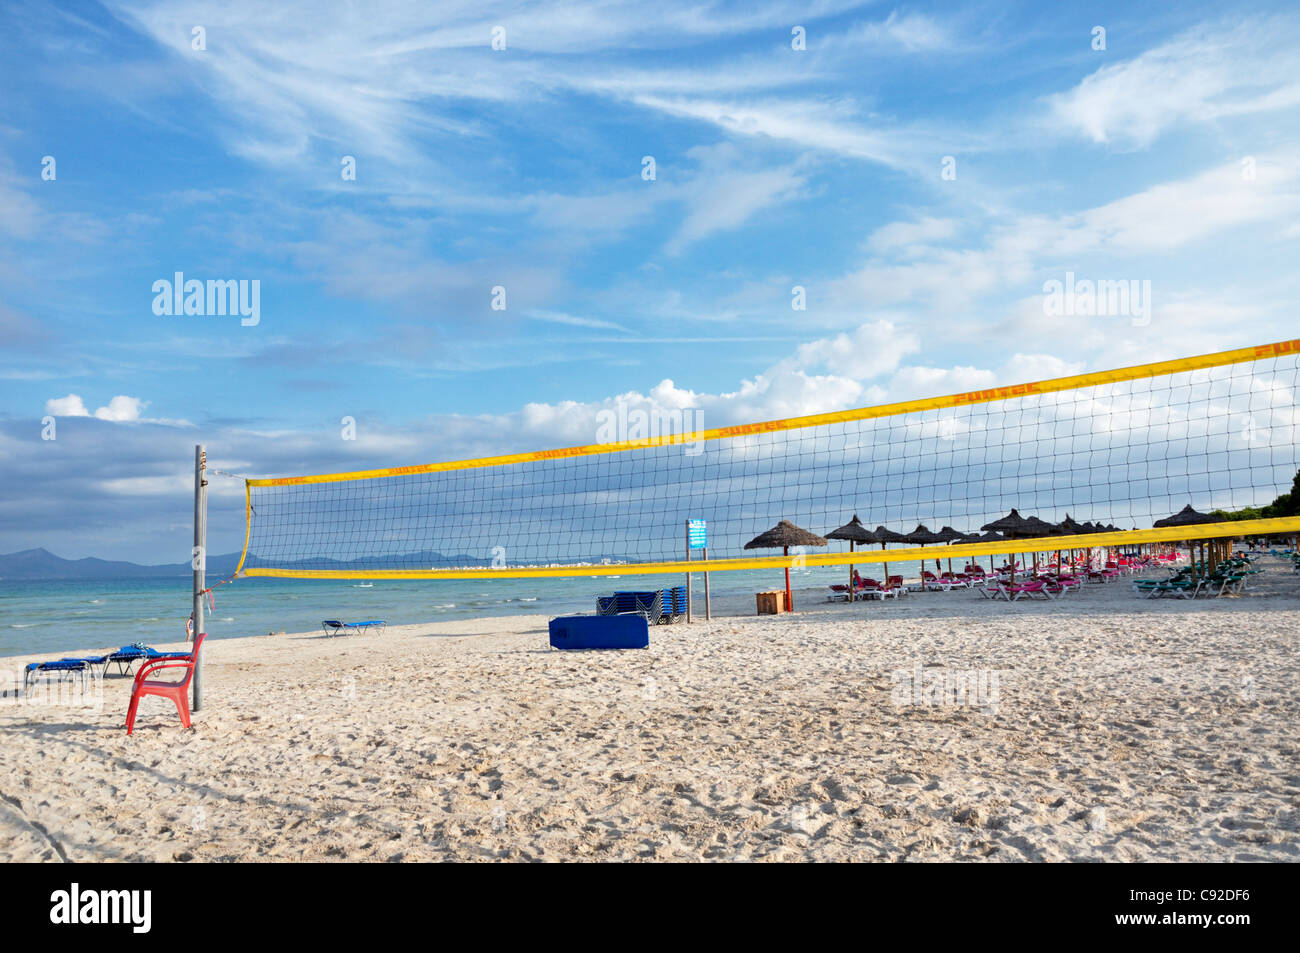 Volleyball net on the beach, Alcudia, Mallorca, Spain Stock Photo